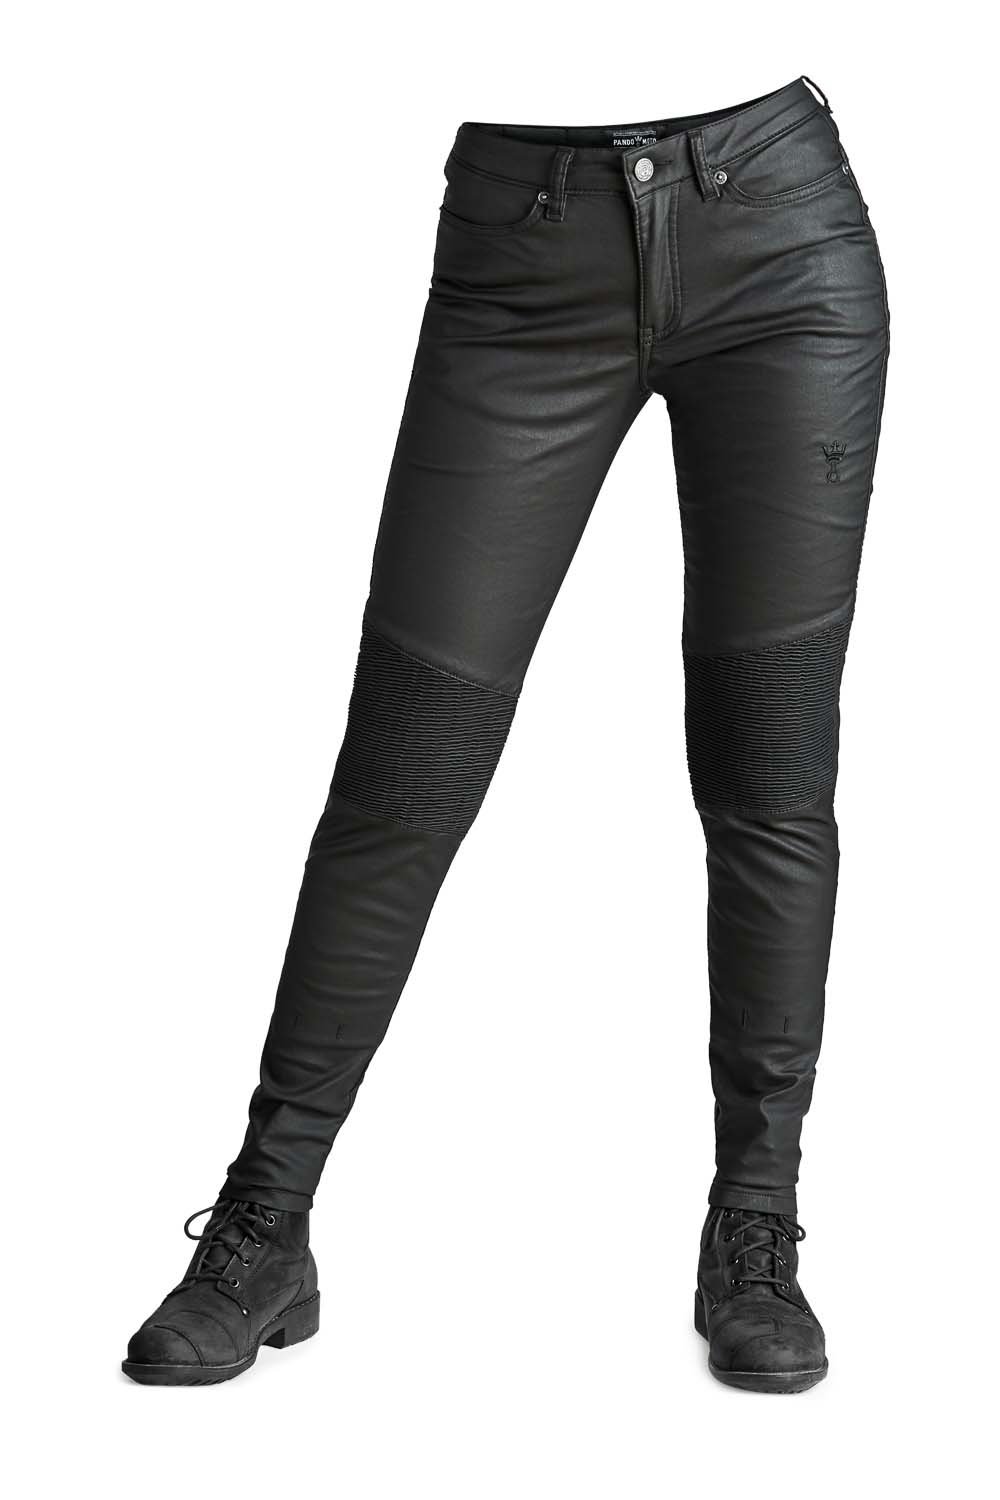 womens skinny motorcycle jeans